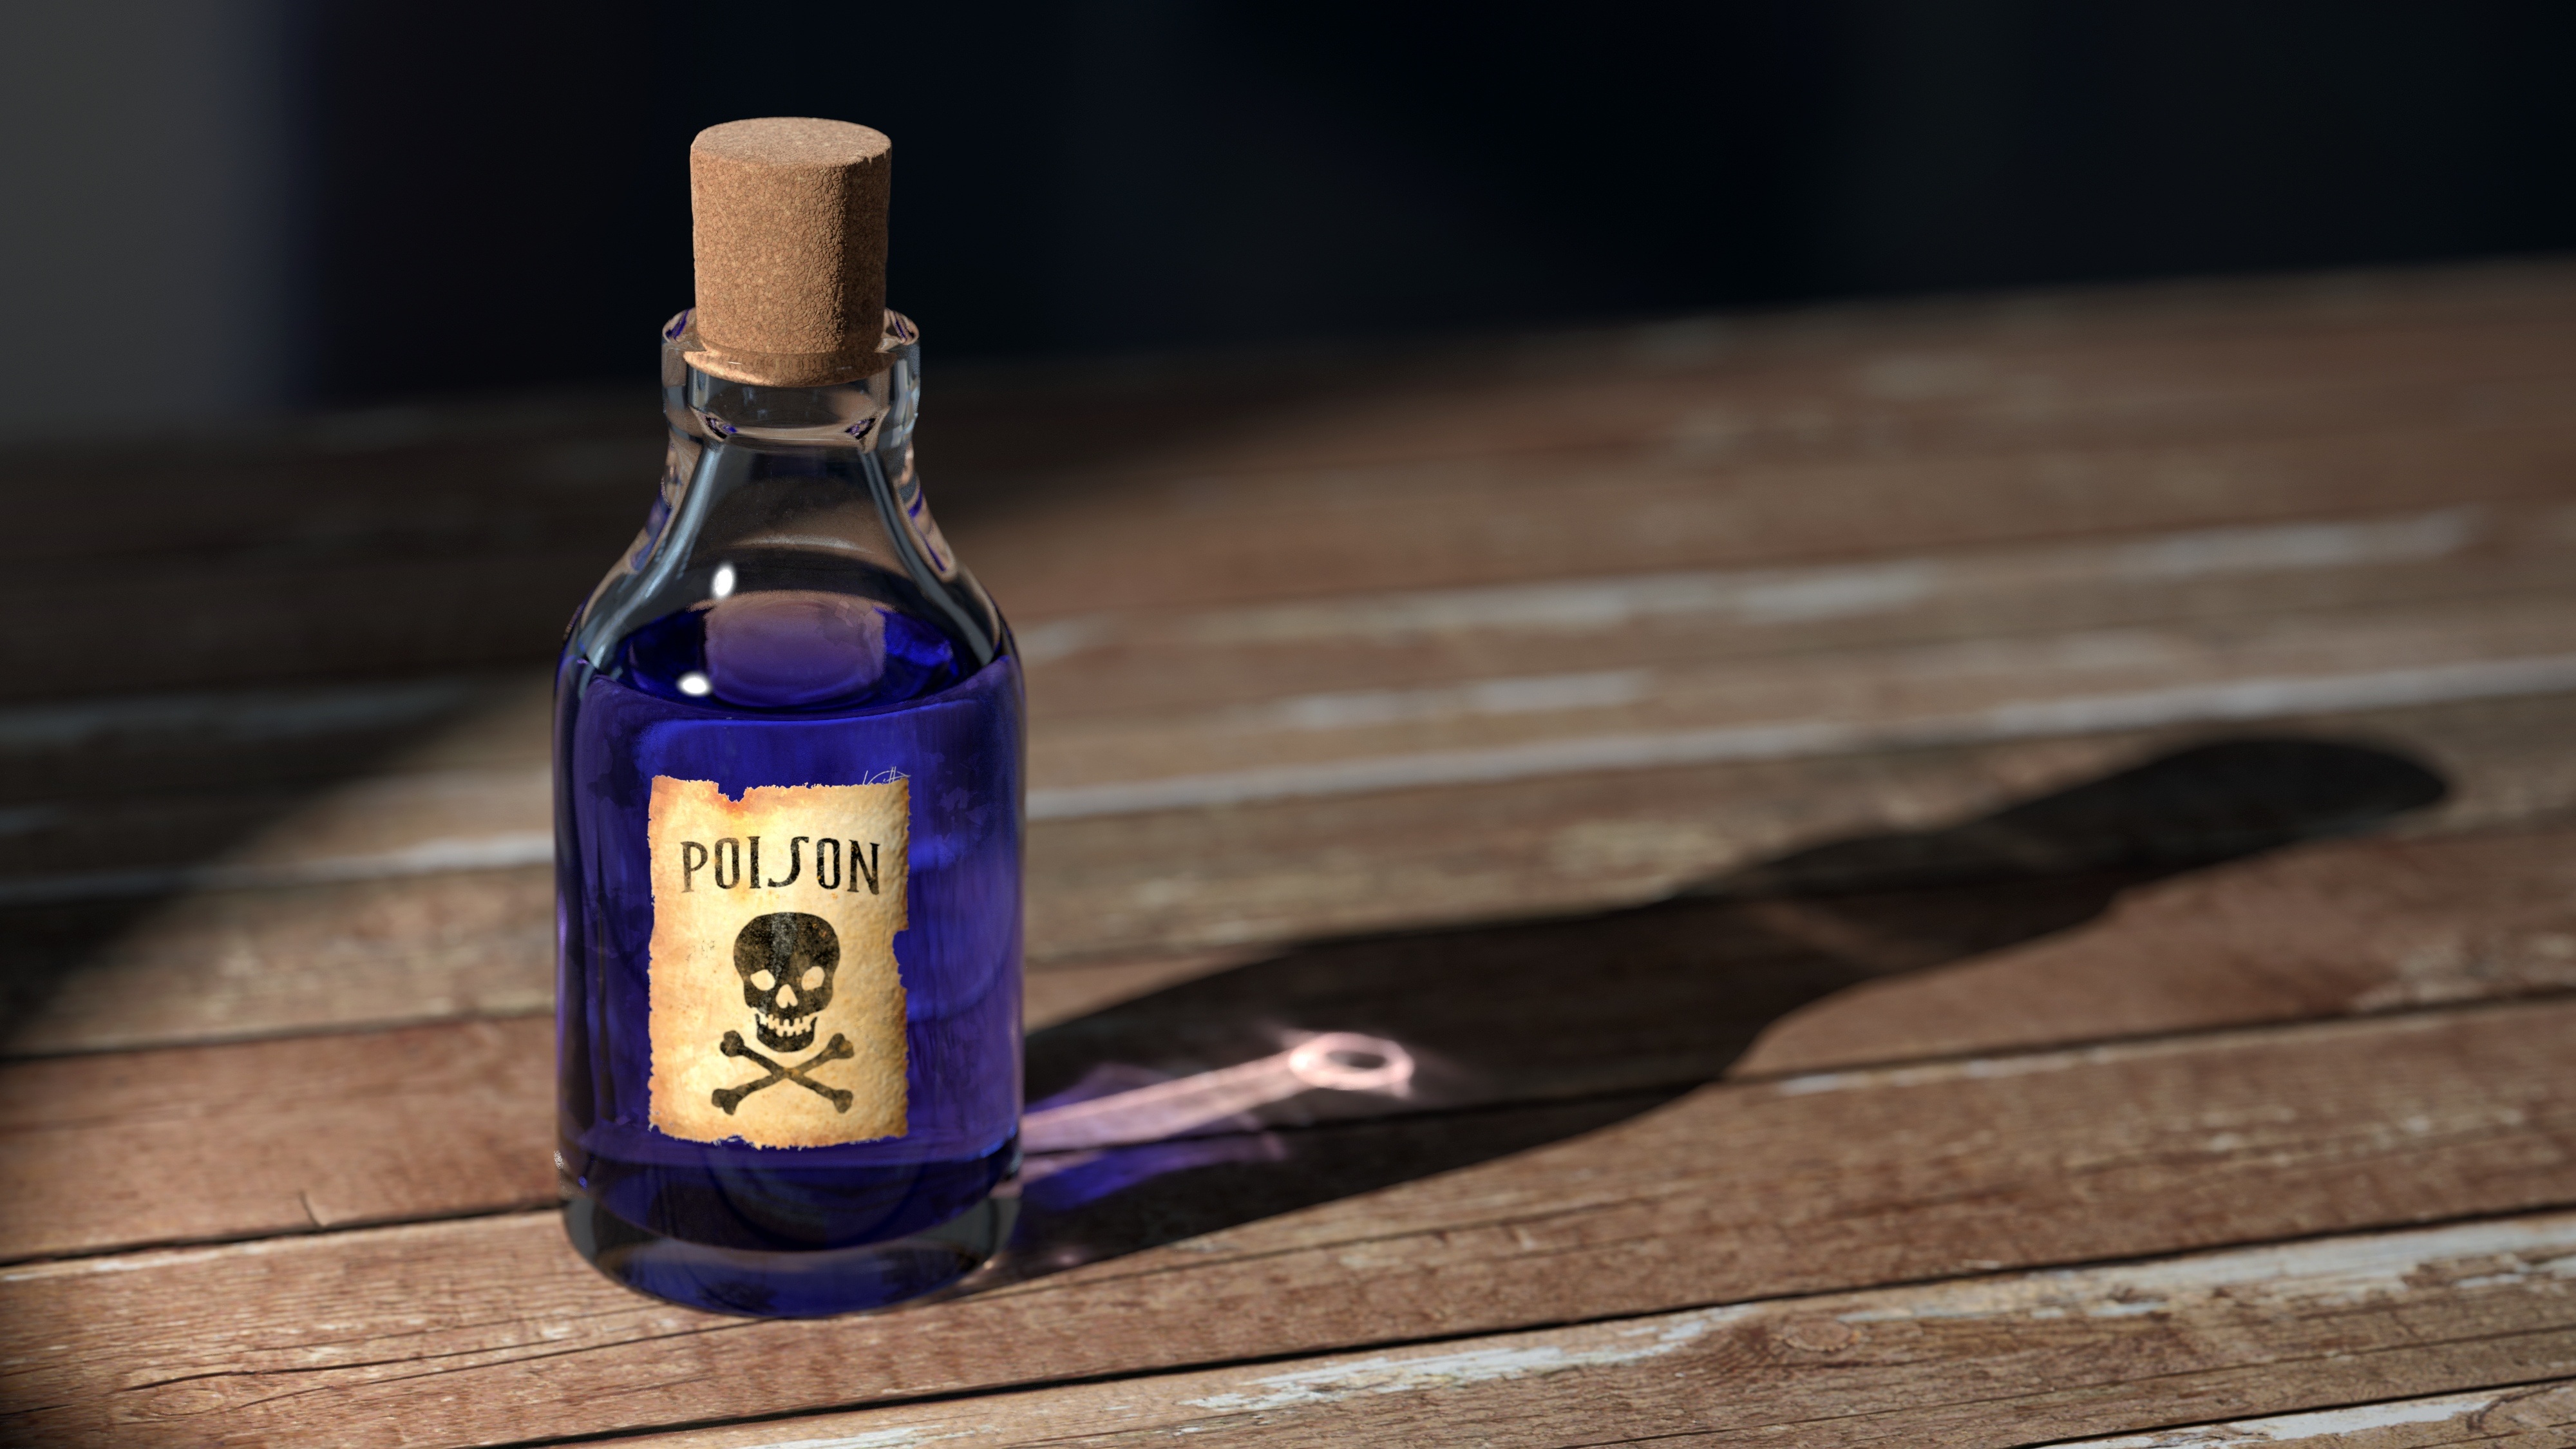 Poison Bottle with Skull and crossbones Symbol by Arek Socha